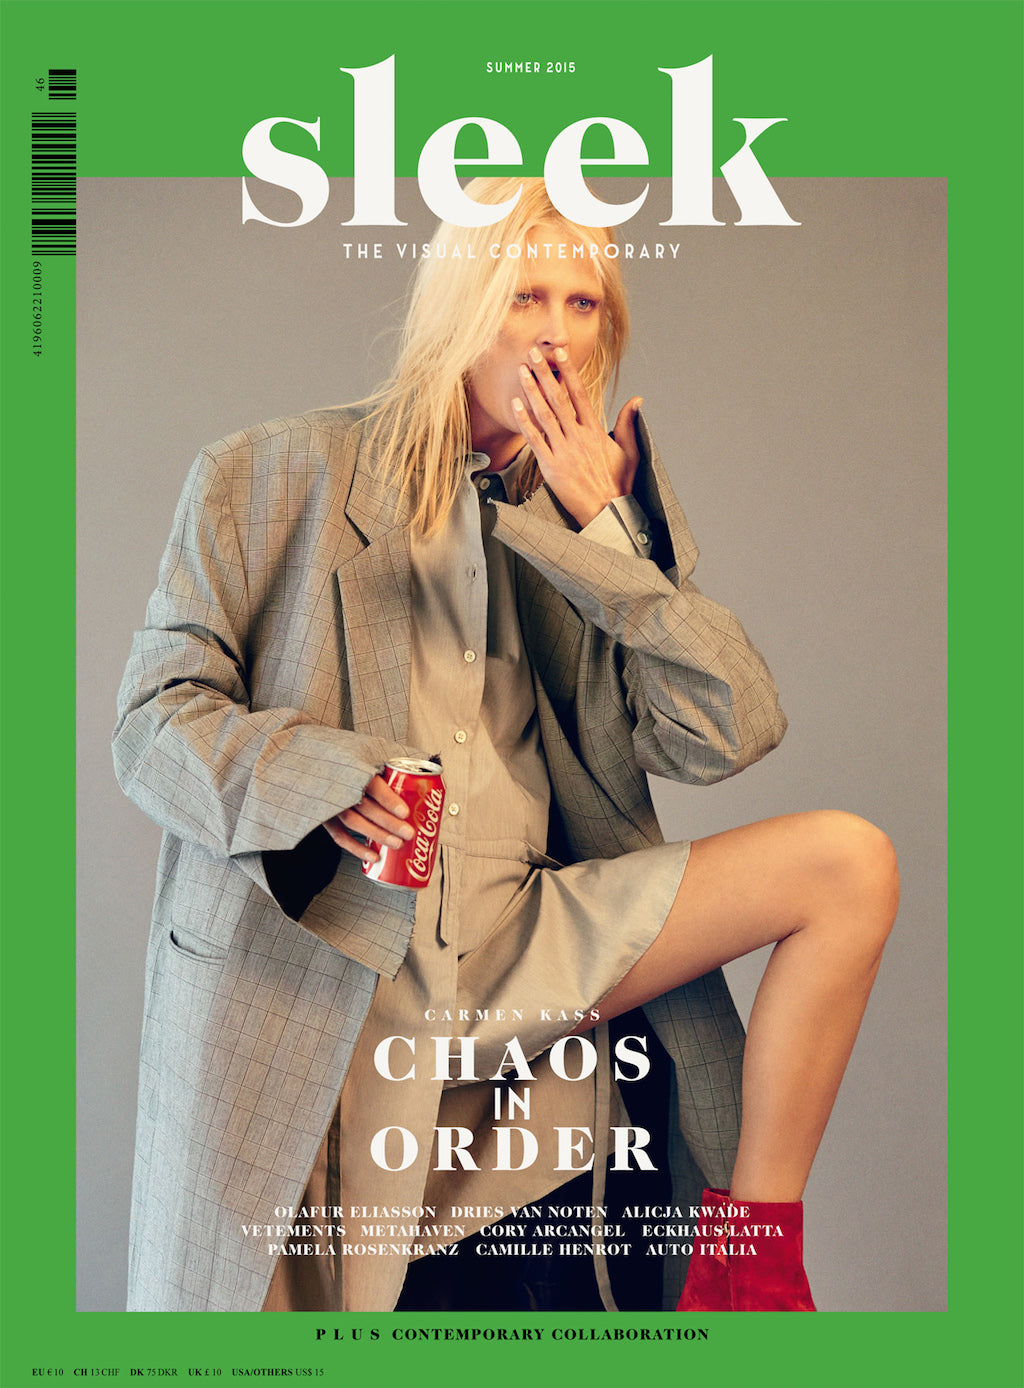 Sleek #46 – Contemporary Collaboration, Fashion Cover – Sleek Magazine